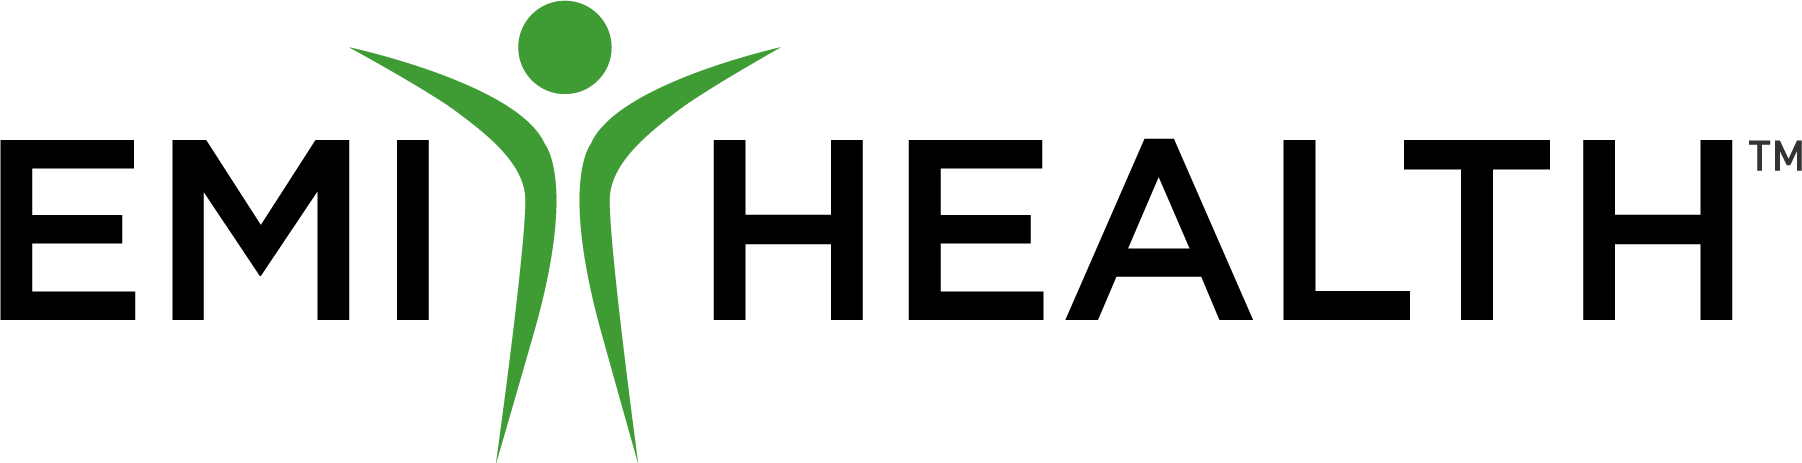 logo_blk_green-1